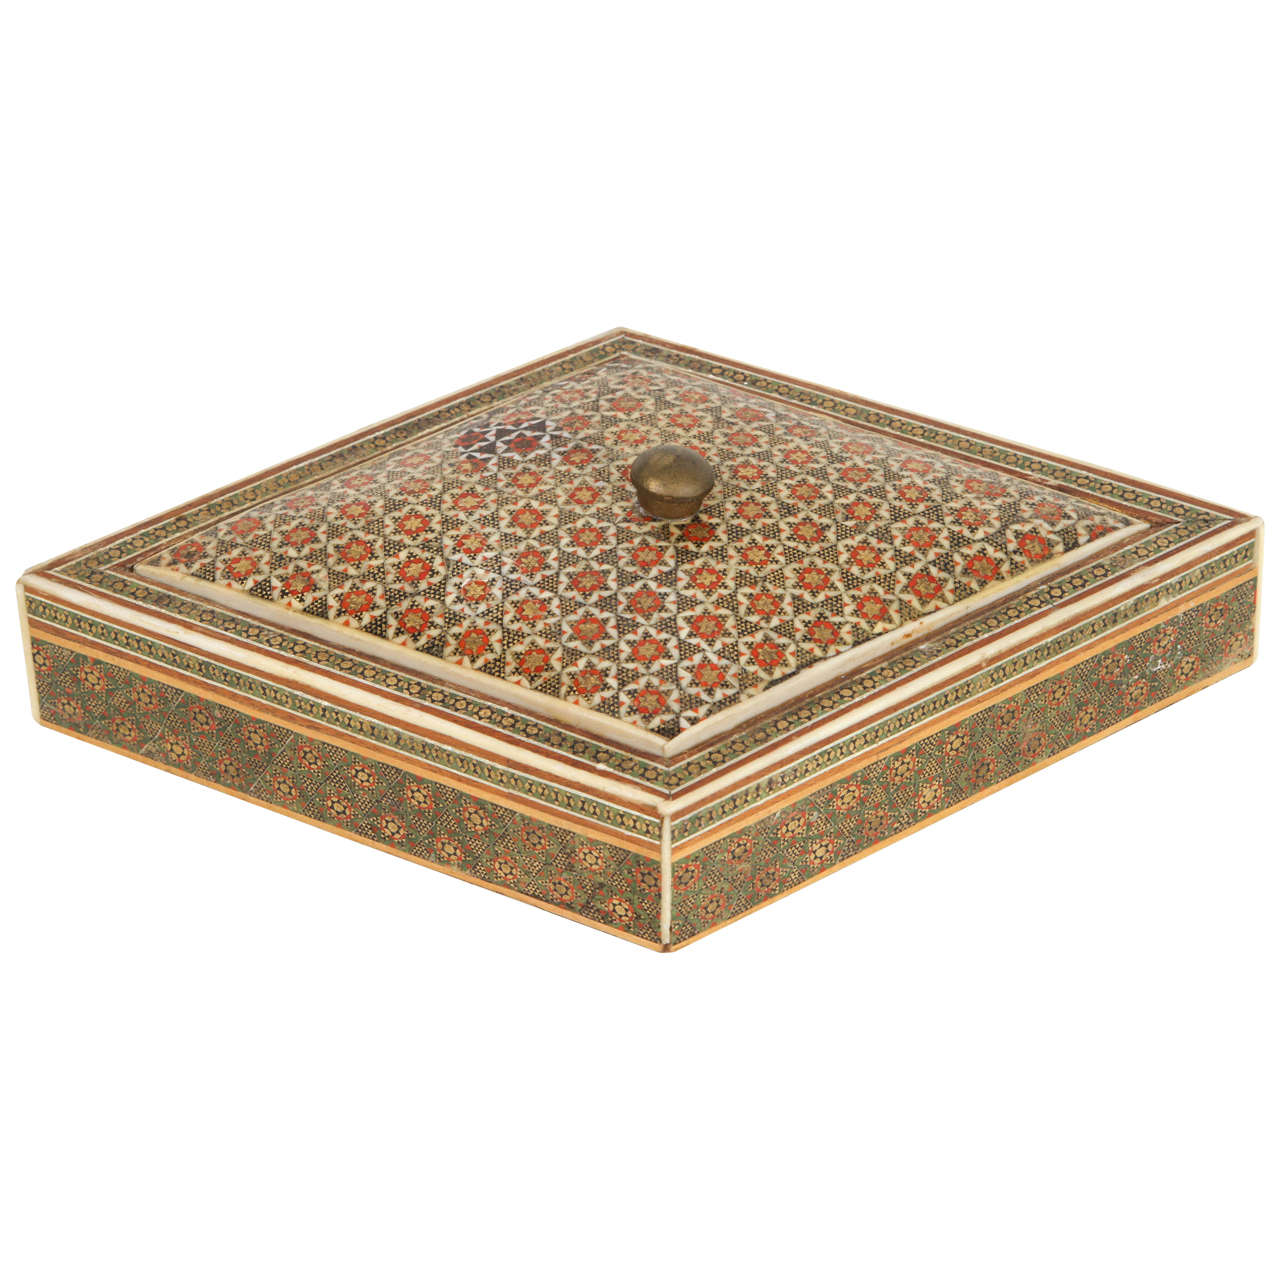 Anglo-Indian Micro Mosaic Inlaid Jewelry Box